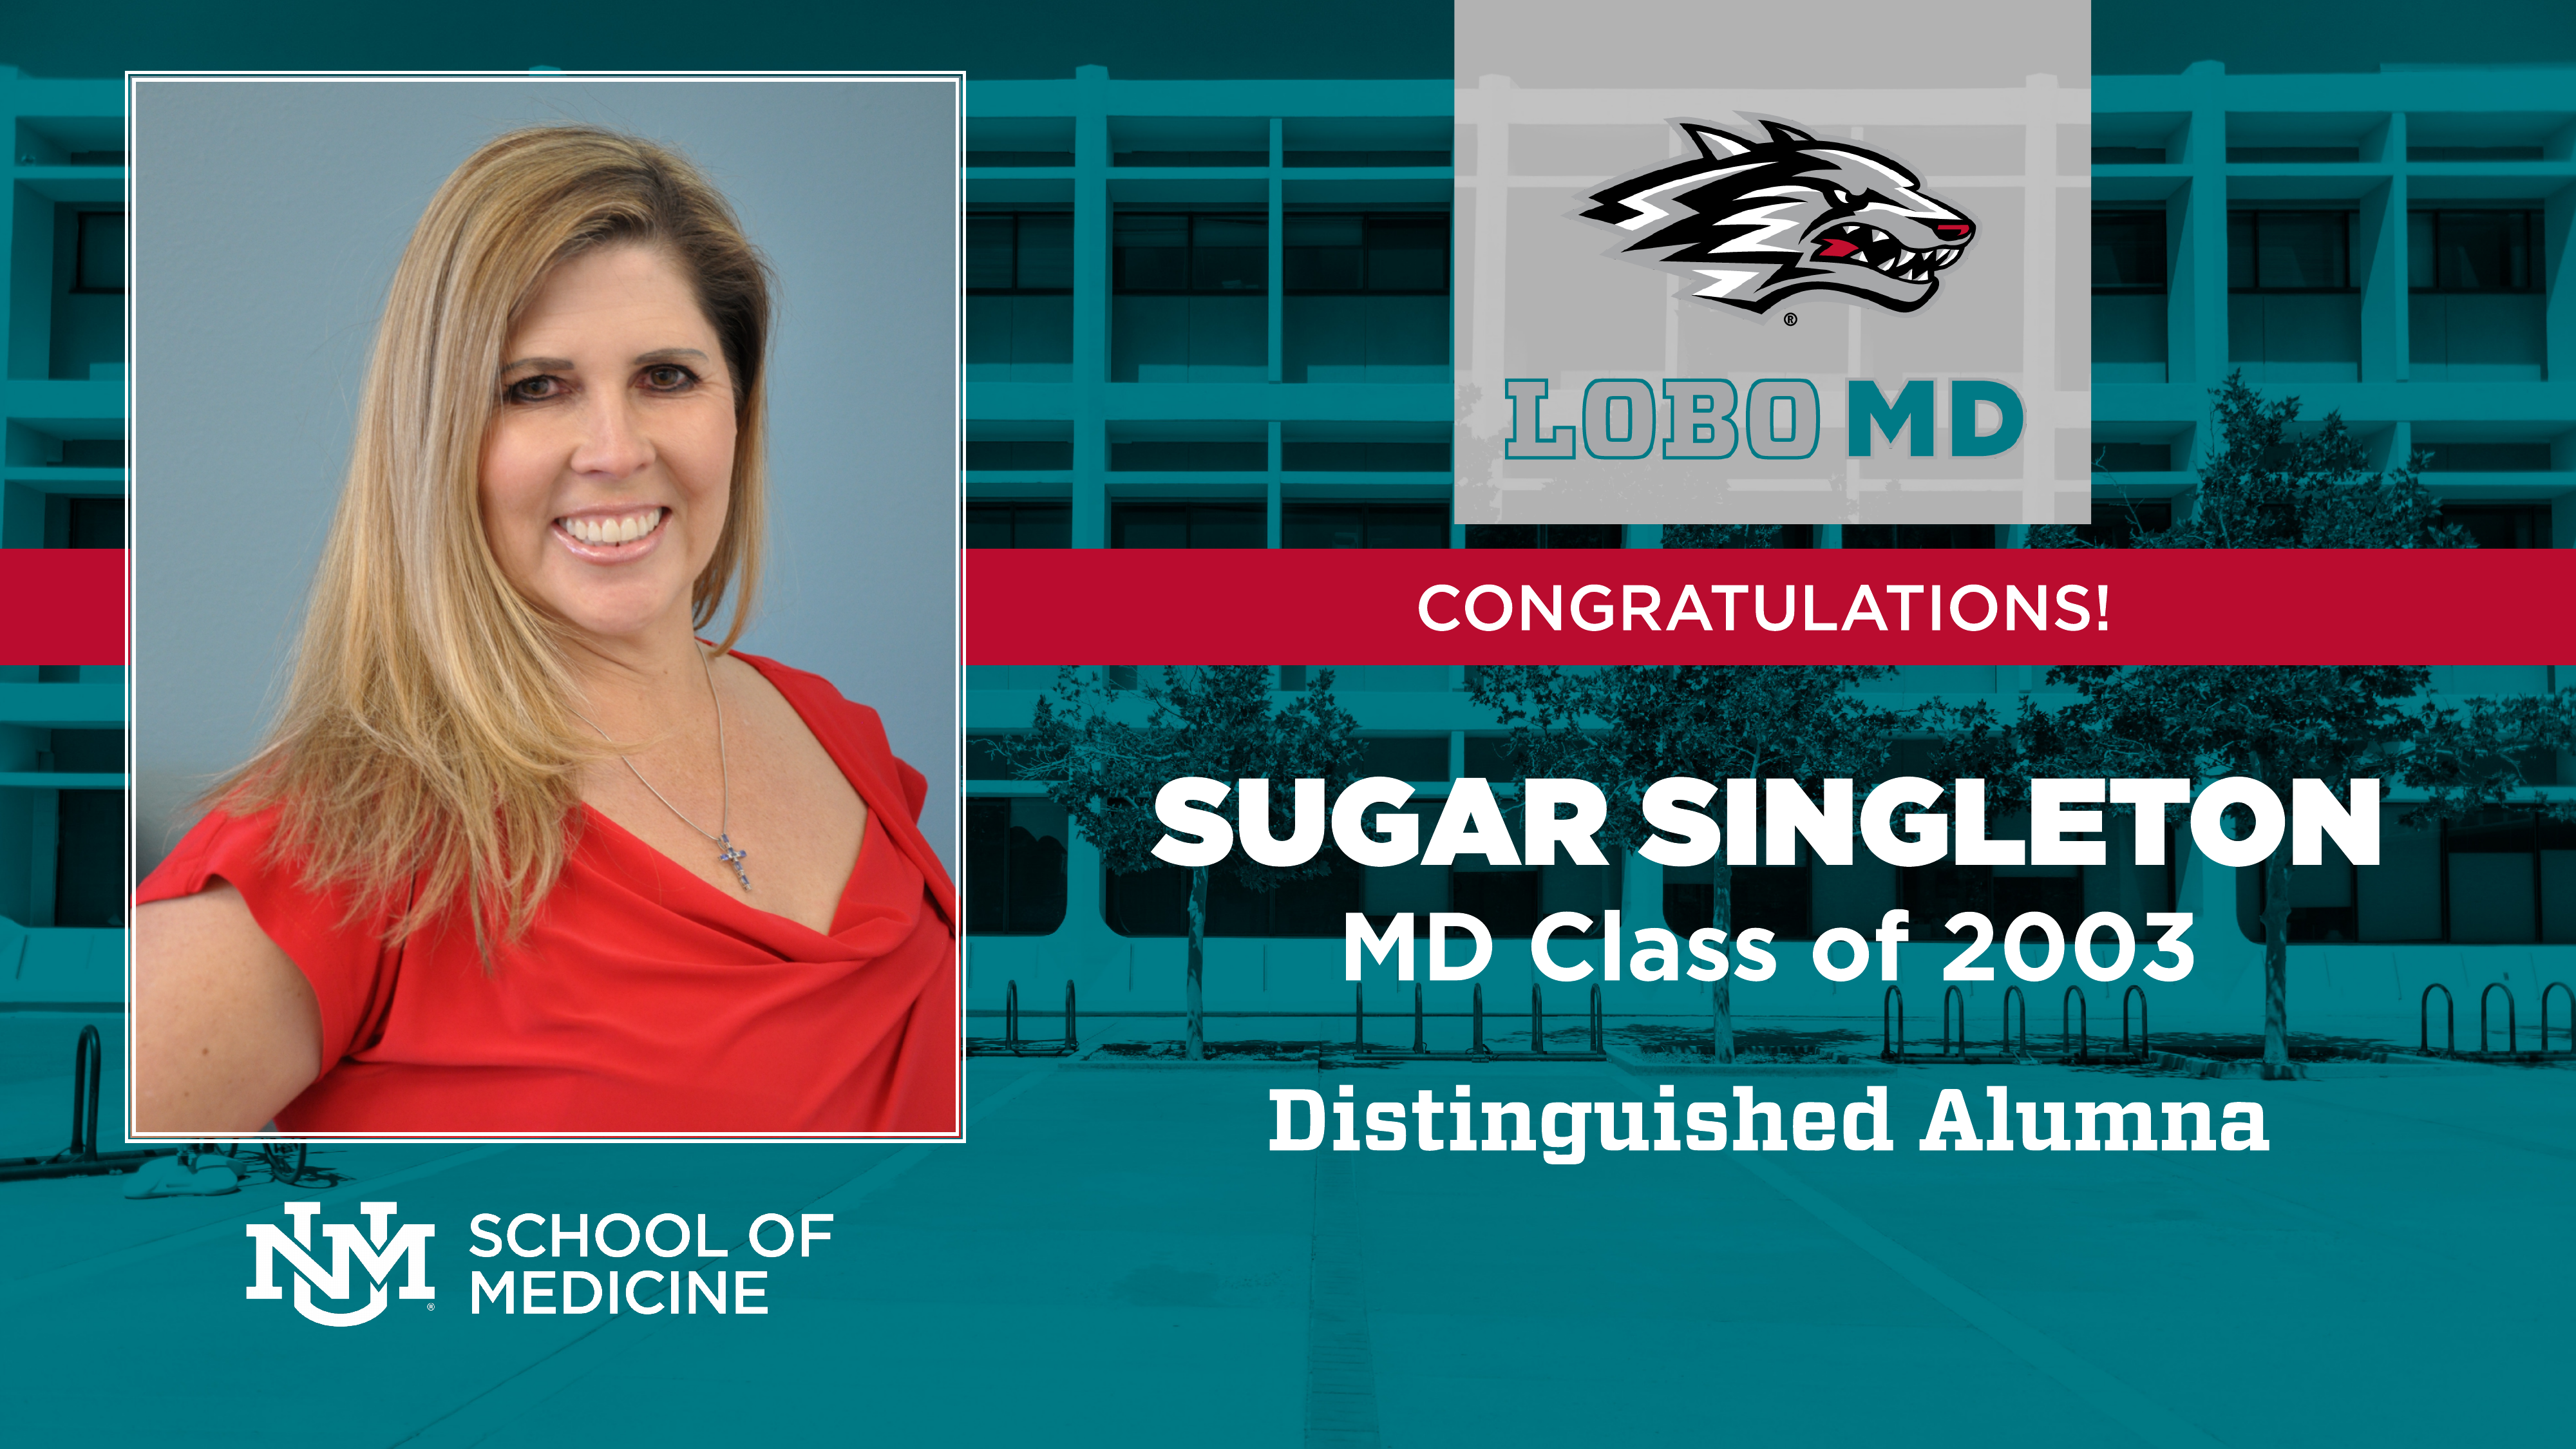 Dr. Azúcar Singleton